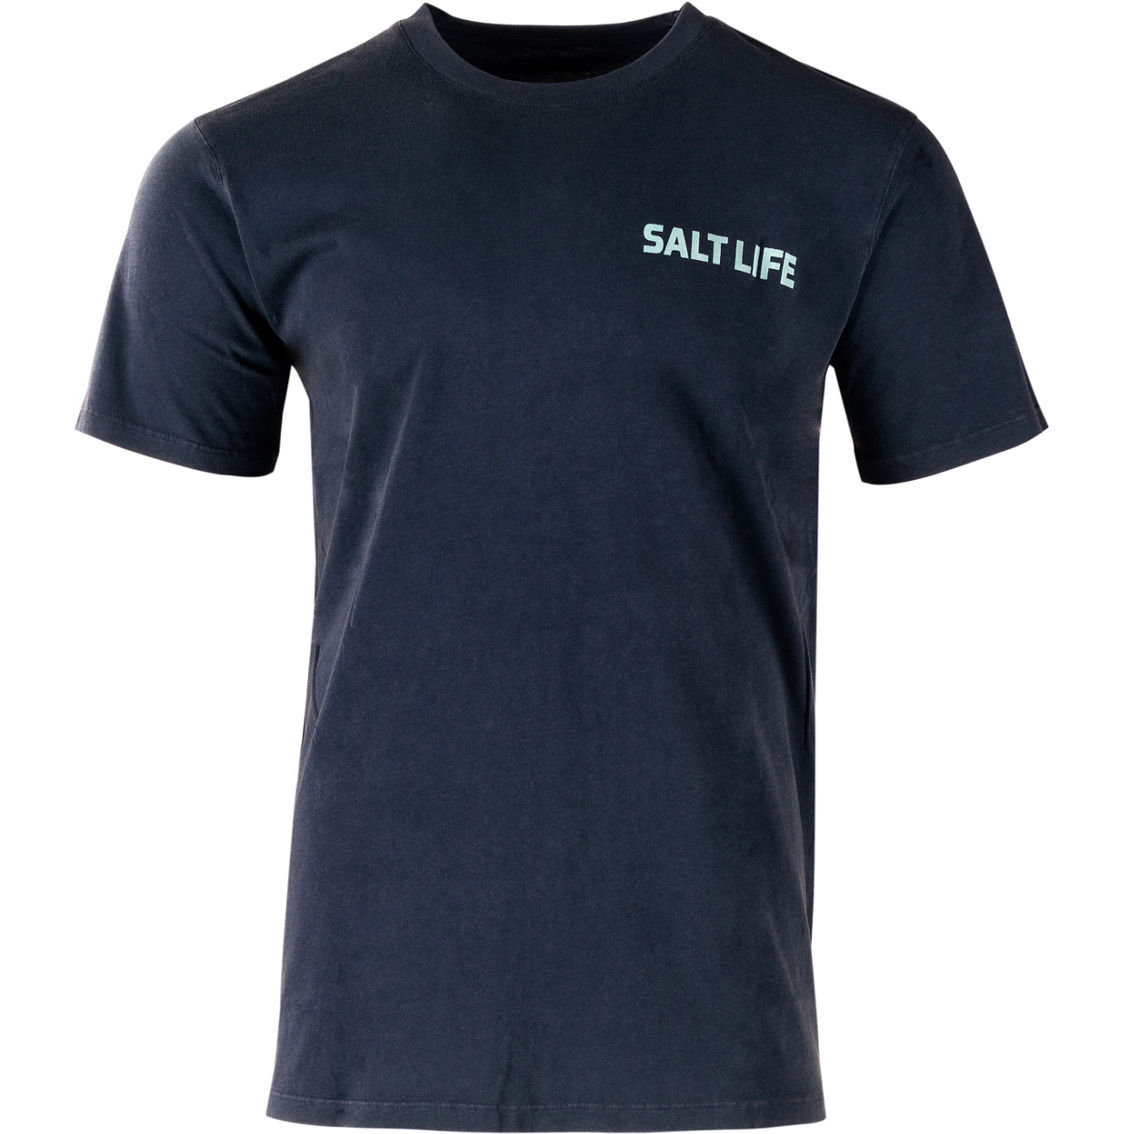 Salt Life Salty Swells Tee, Shirts, Clothing & Accessories